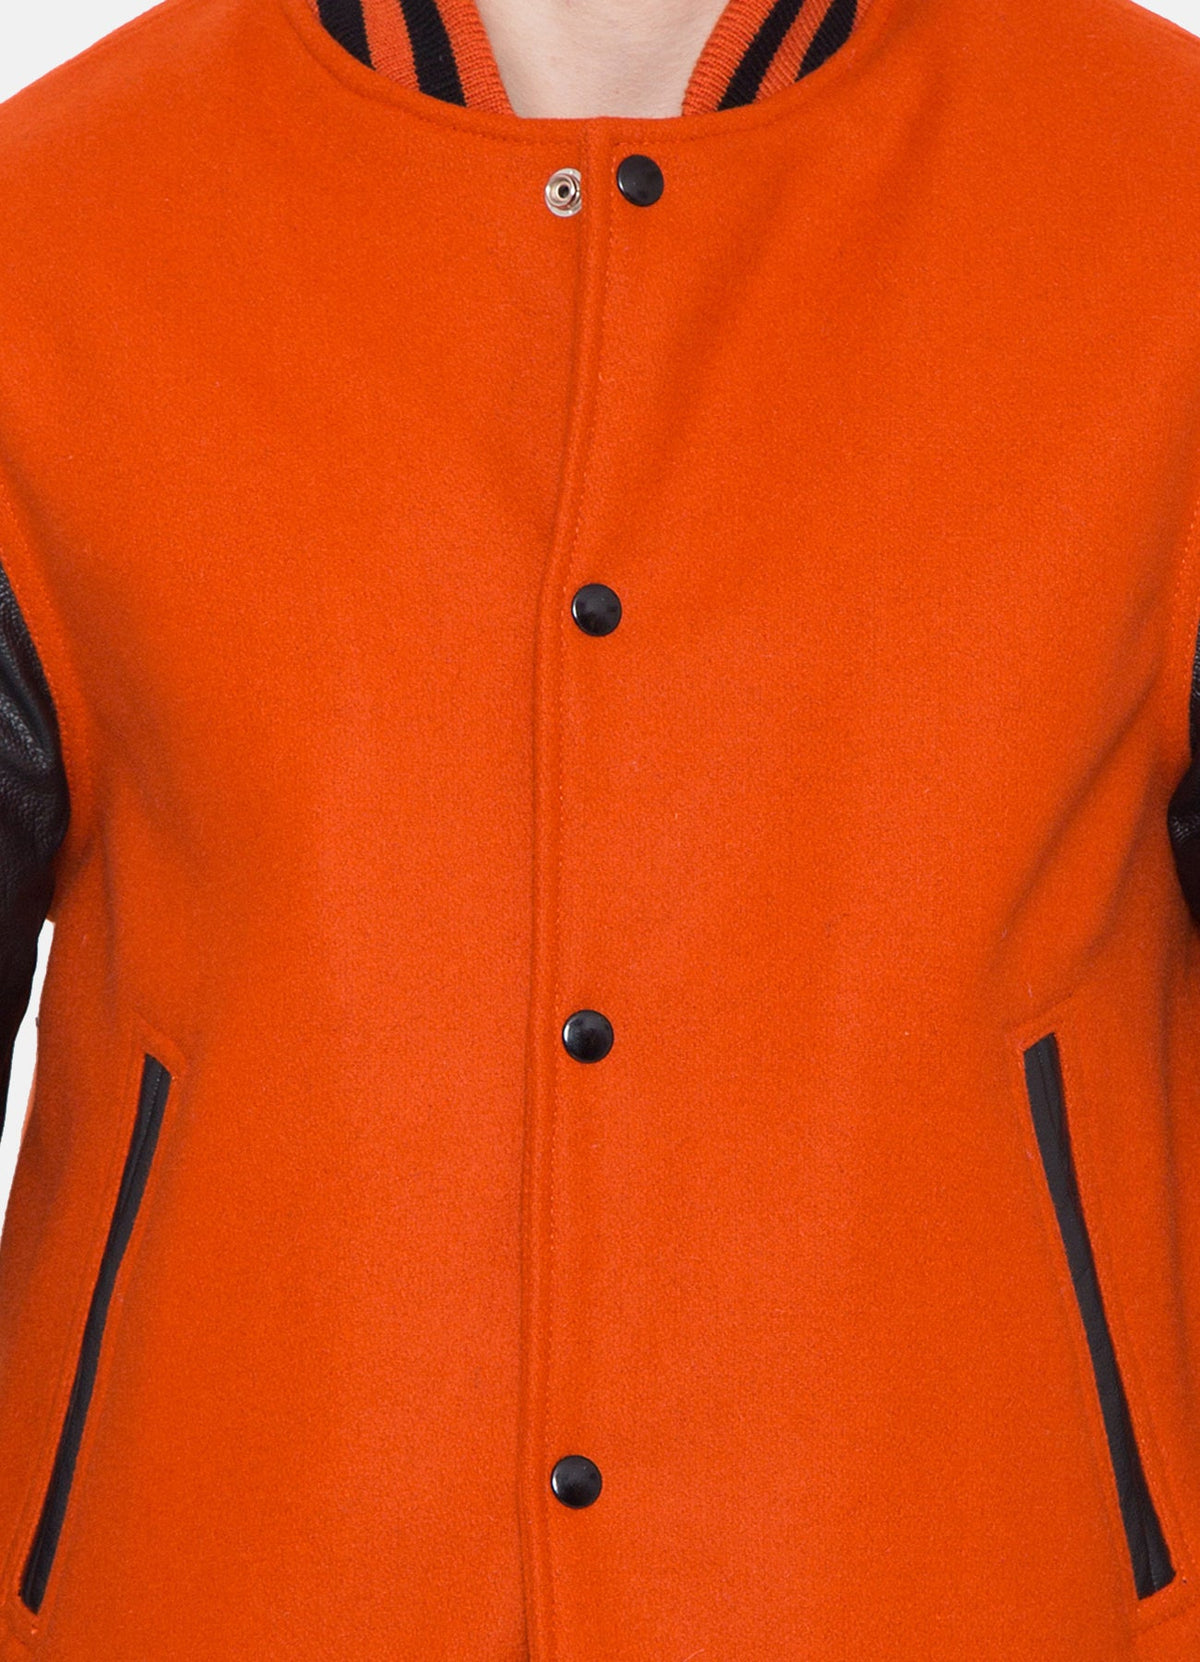 Mens Orange and Black Varsity Jacket